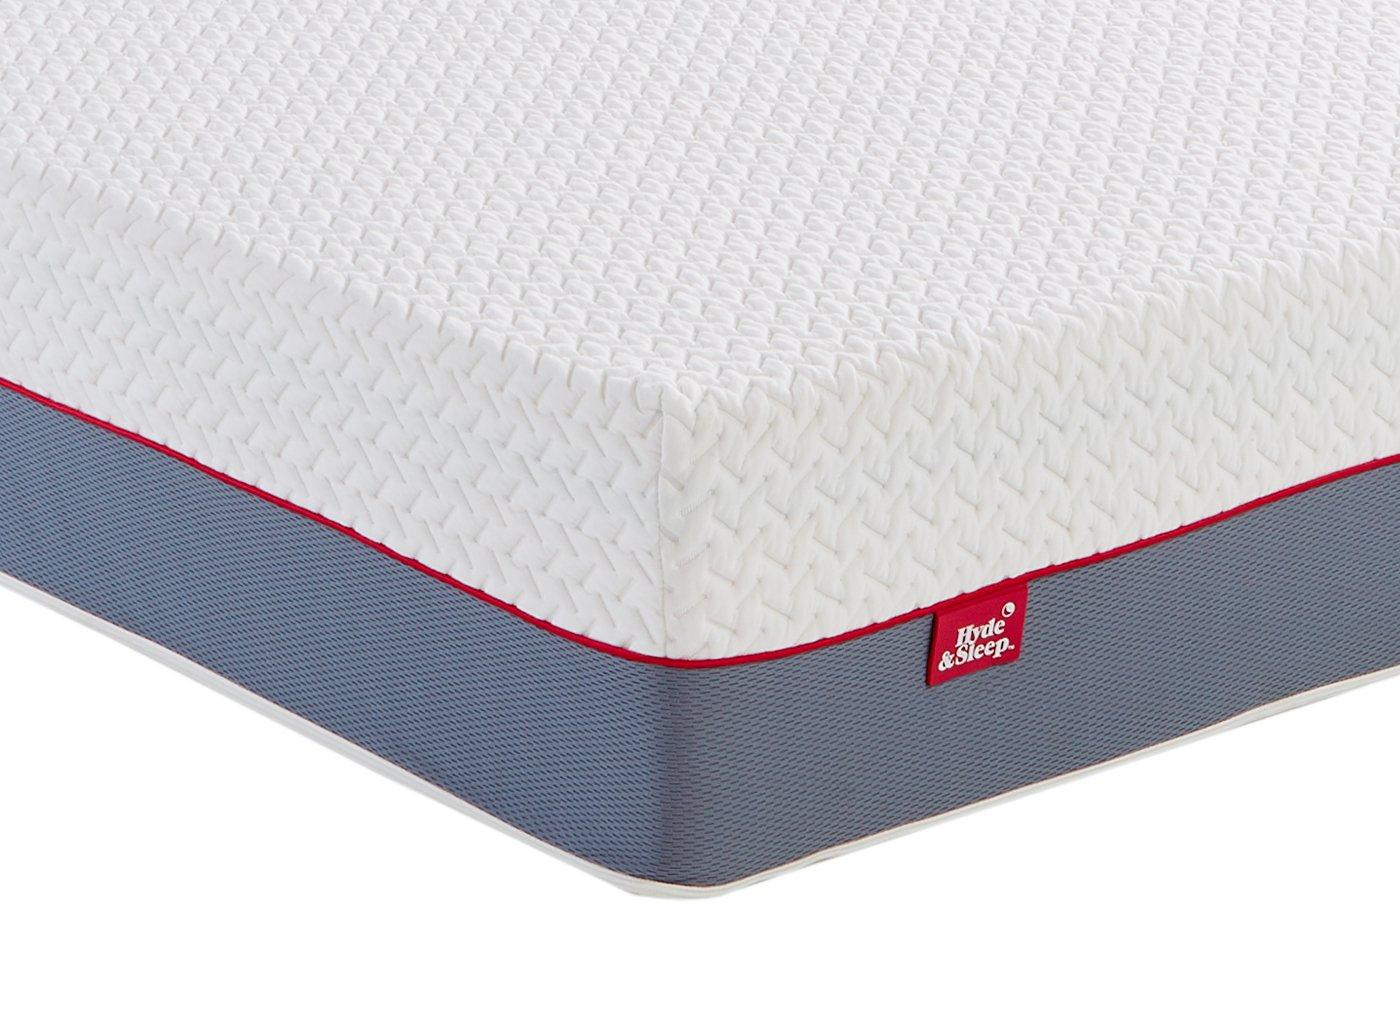 hyde and sleep blueberry mattress review